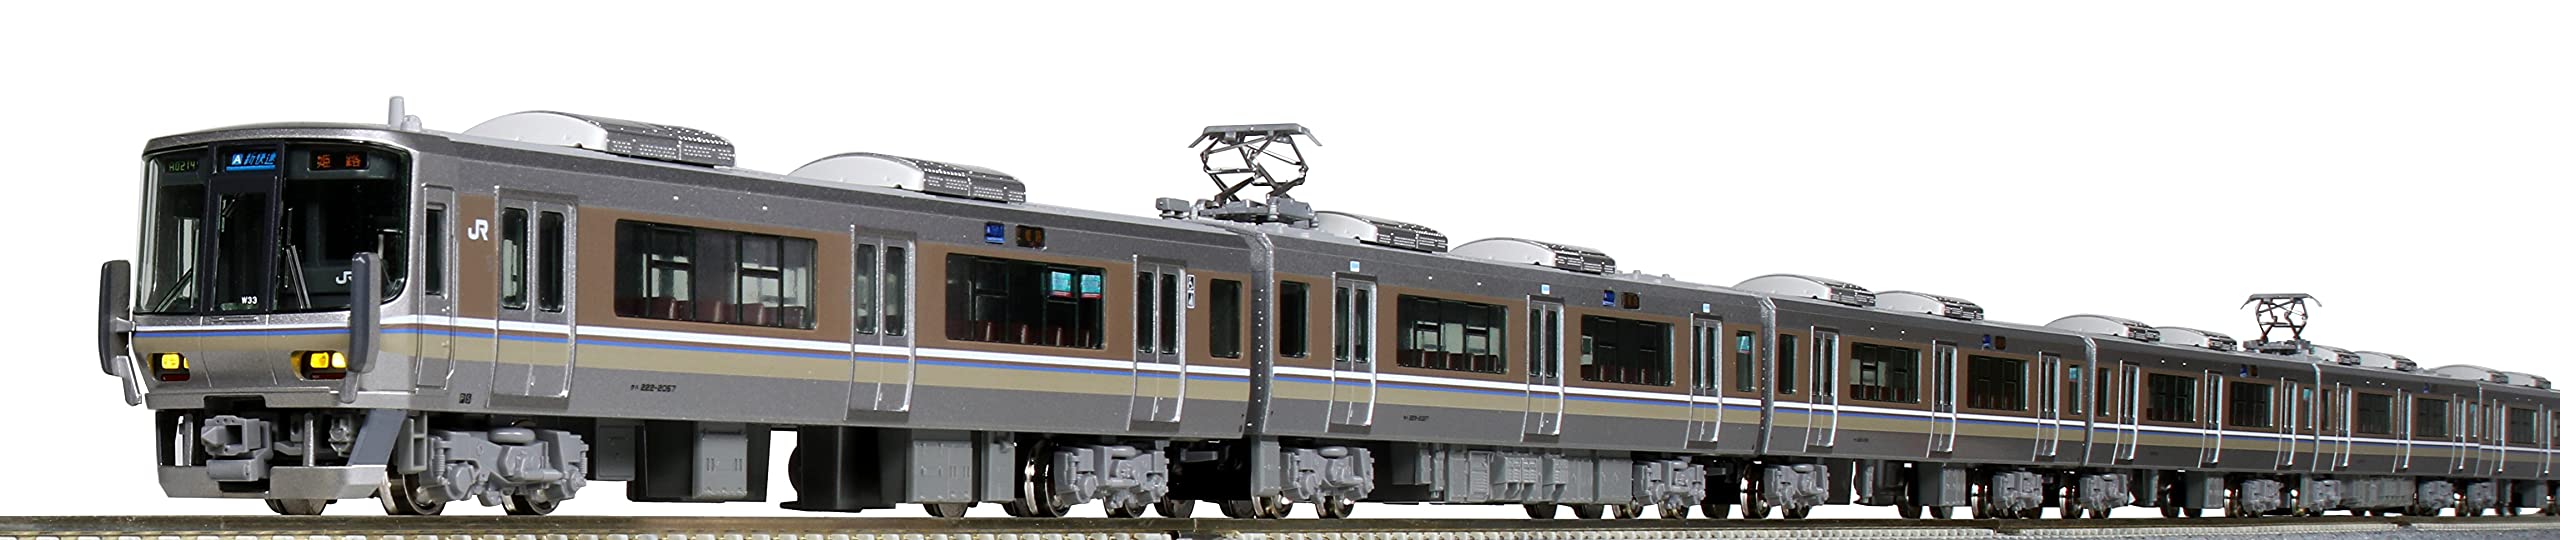 Kato N Gauge 223 Series New Rapid 8-Car Set 10-1678 Railway Model Train